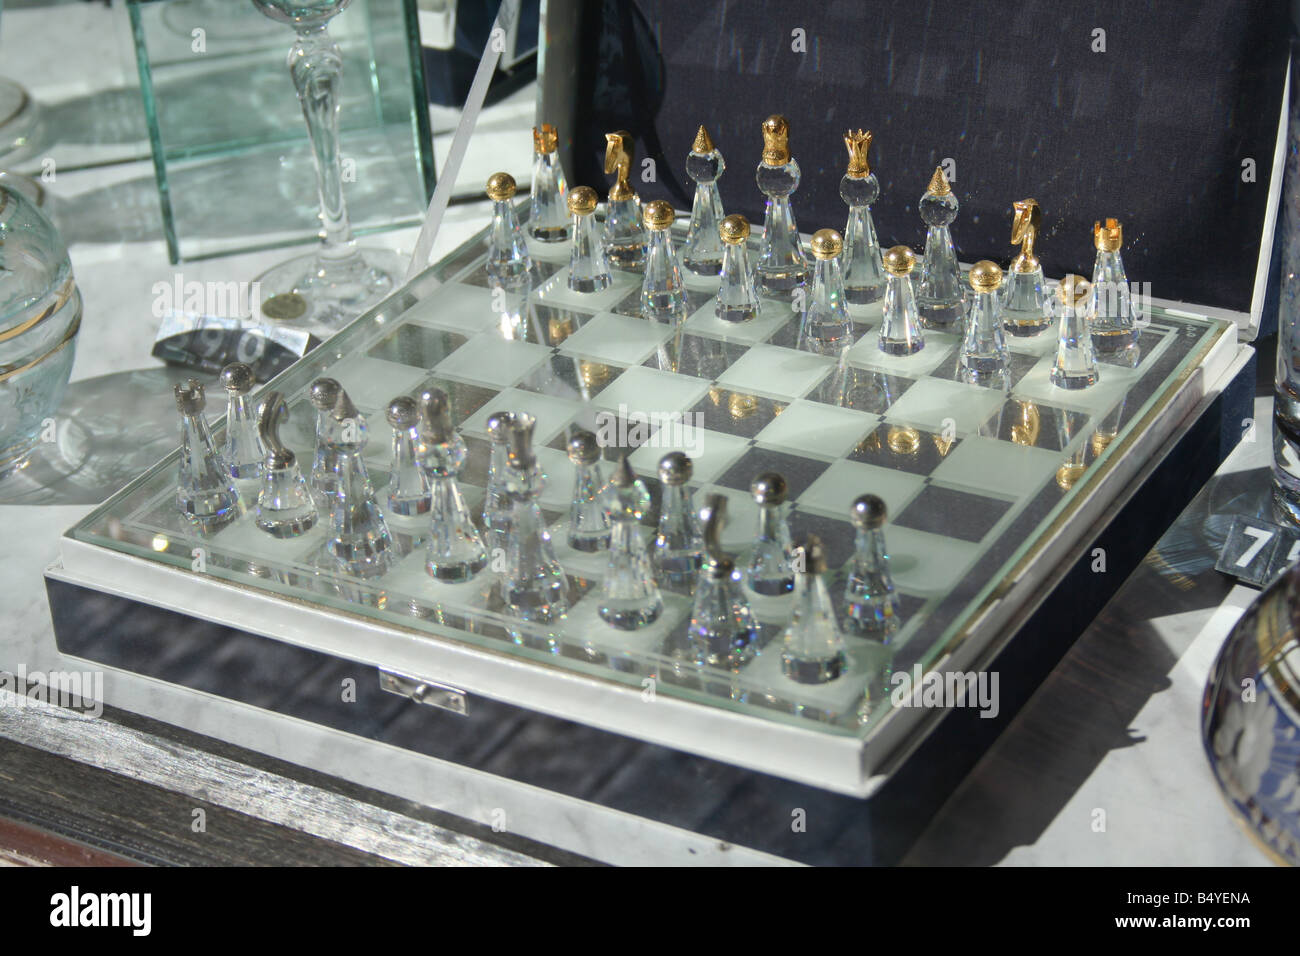 Chess from Bohemia glass Prague Czech republic Stock Photo